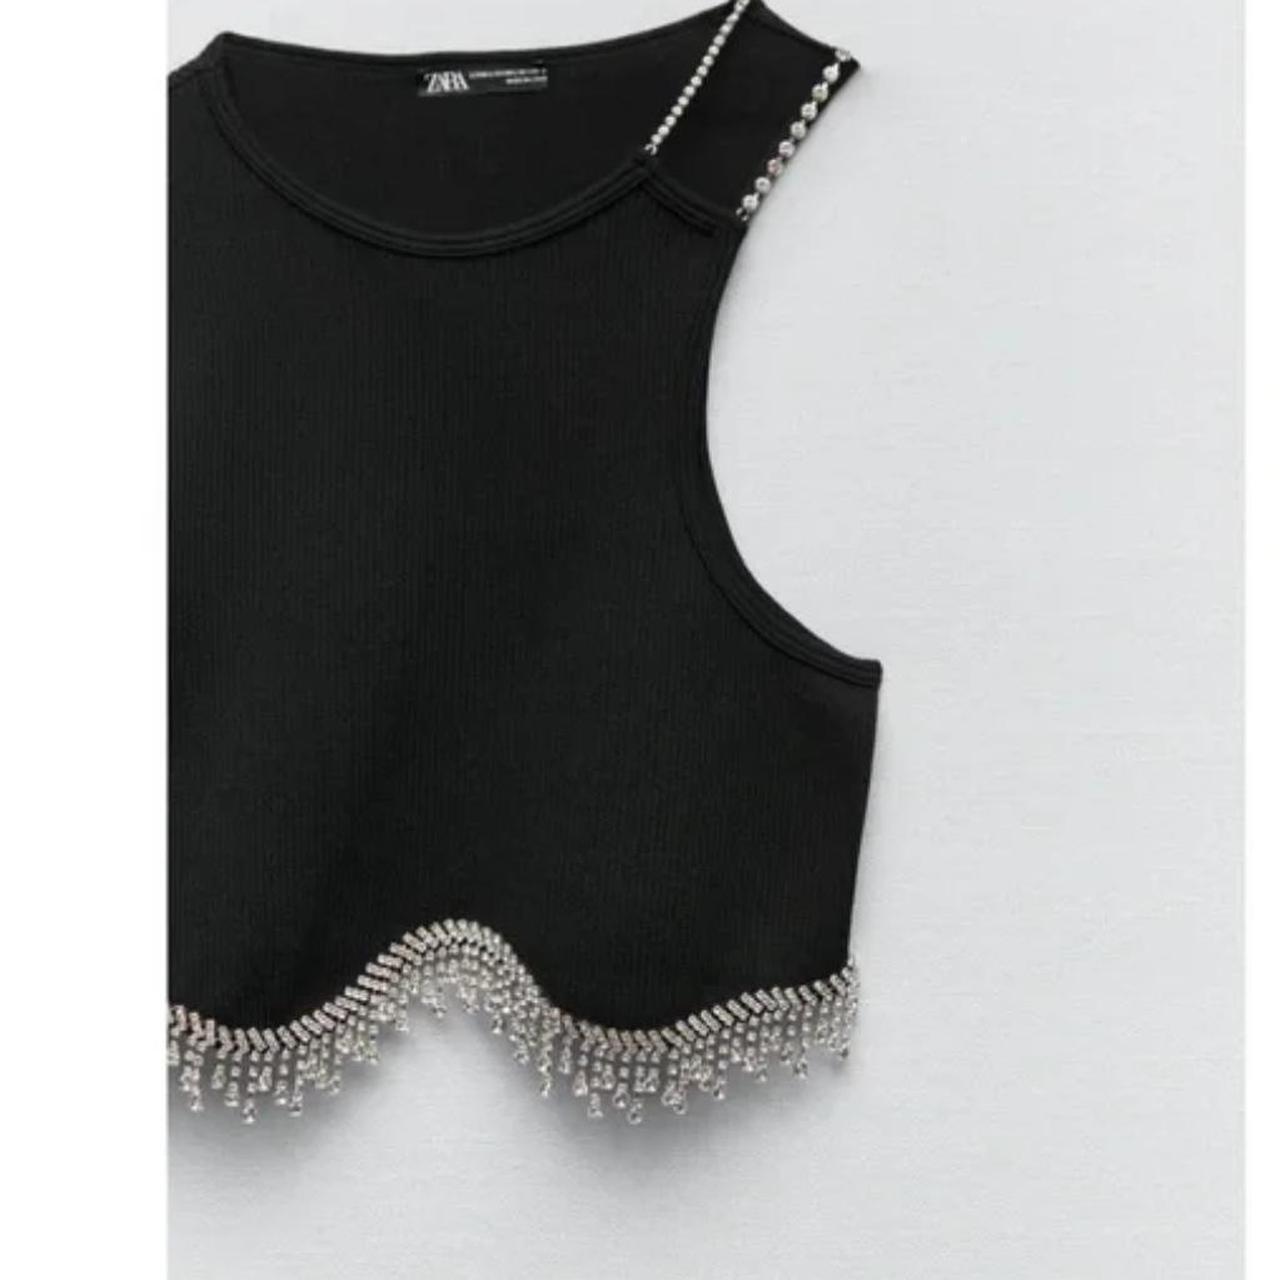 Zara seamless rhinestone top and jewel leggings limited edition